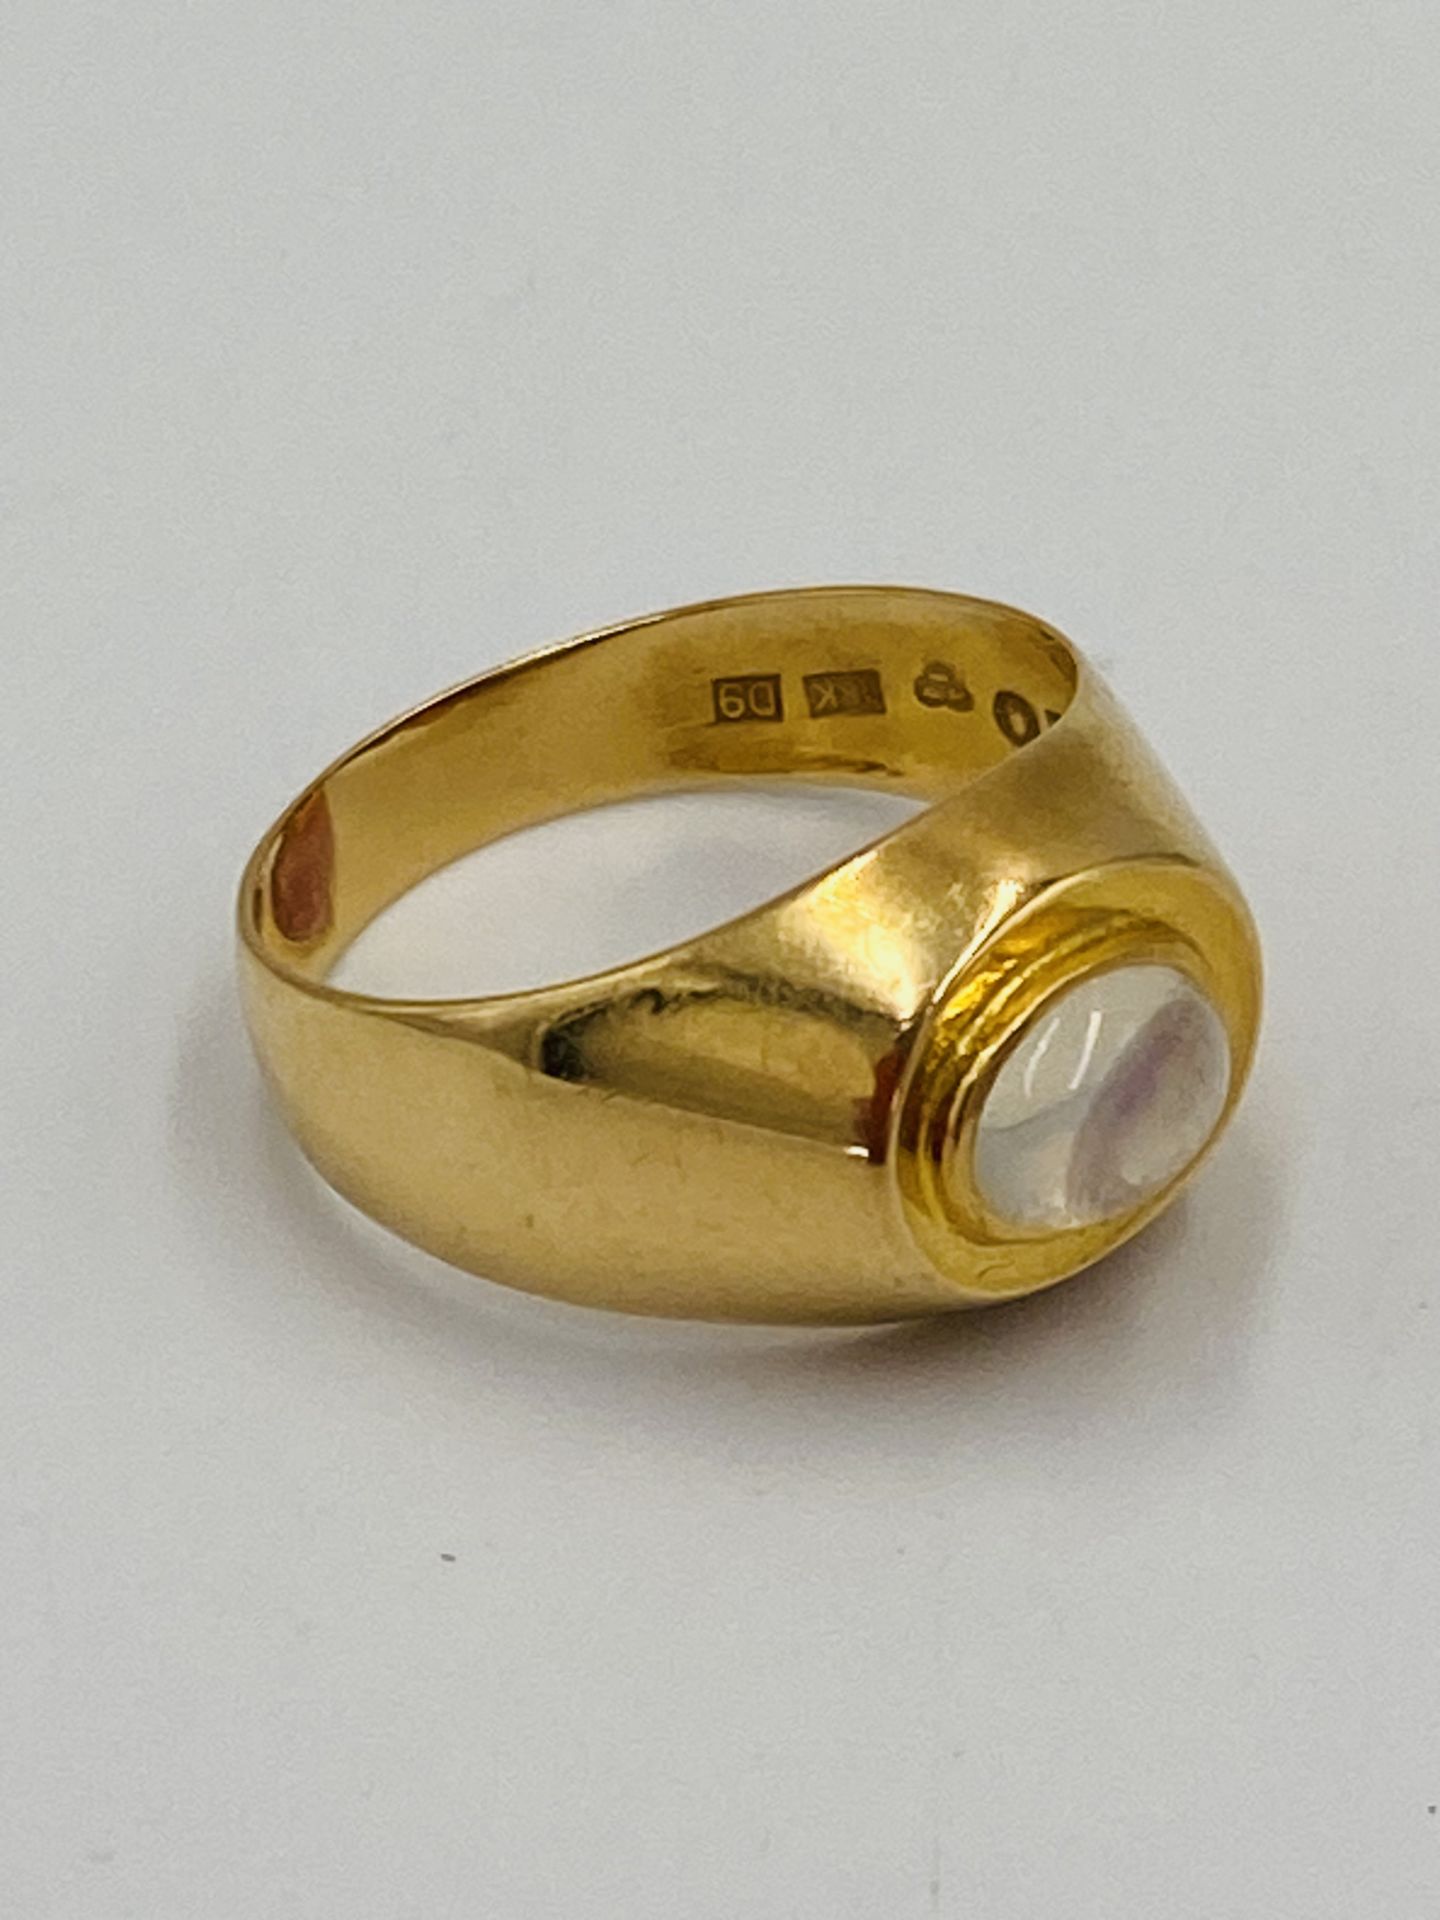 18ct gold signet ring - Image 2 of 4